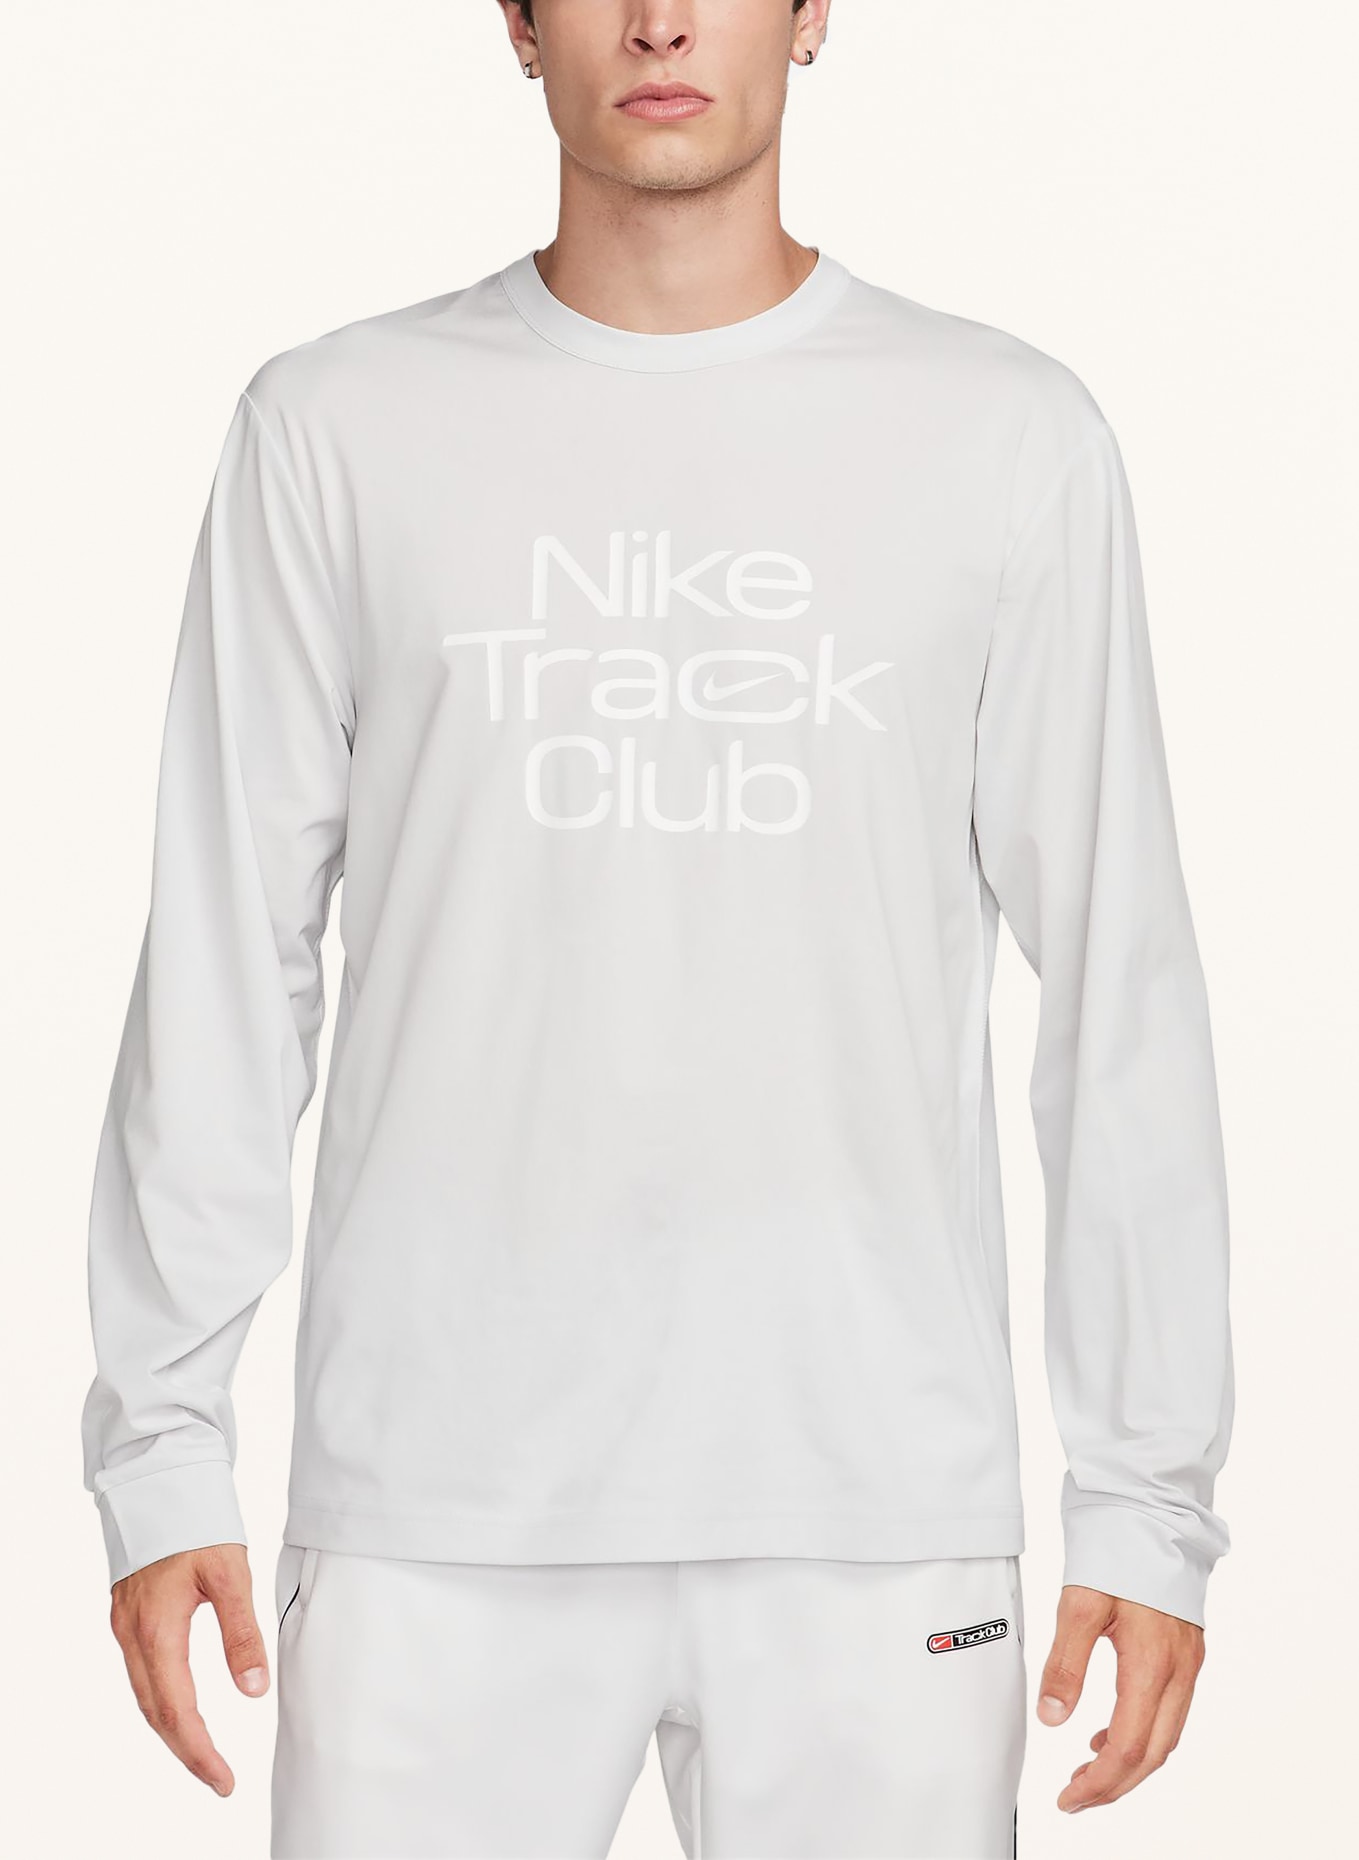 Nike Running shirt TRACK CLUB, Color: LIGHT GRAY/ WHITE (Image 4)